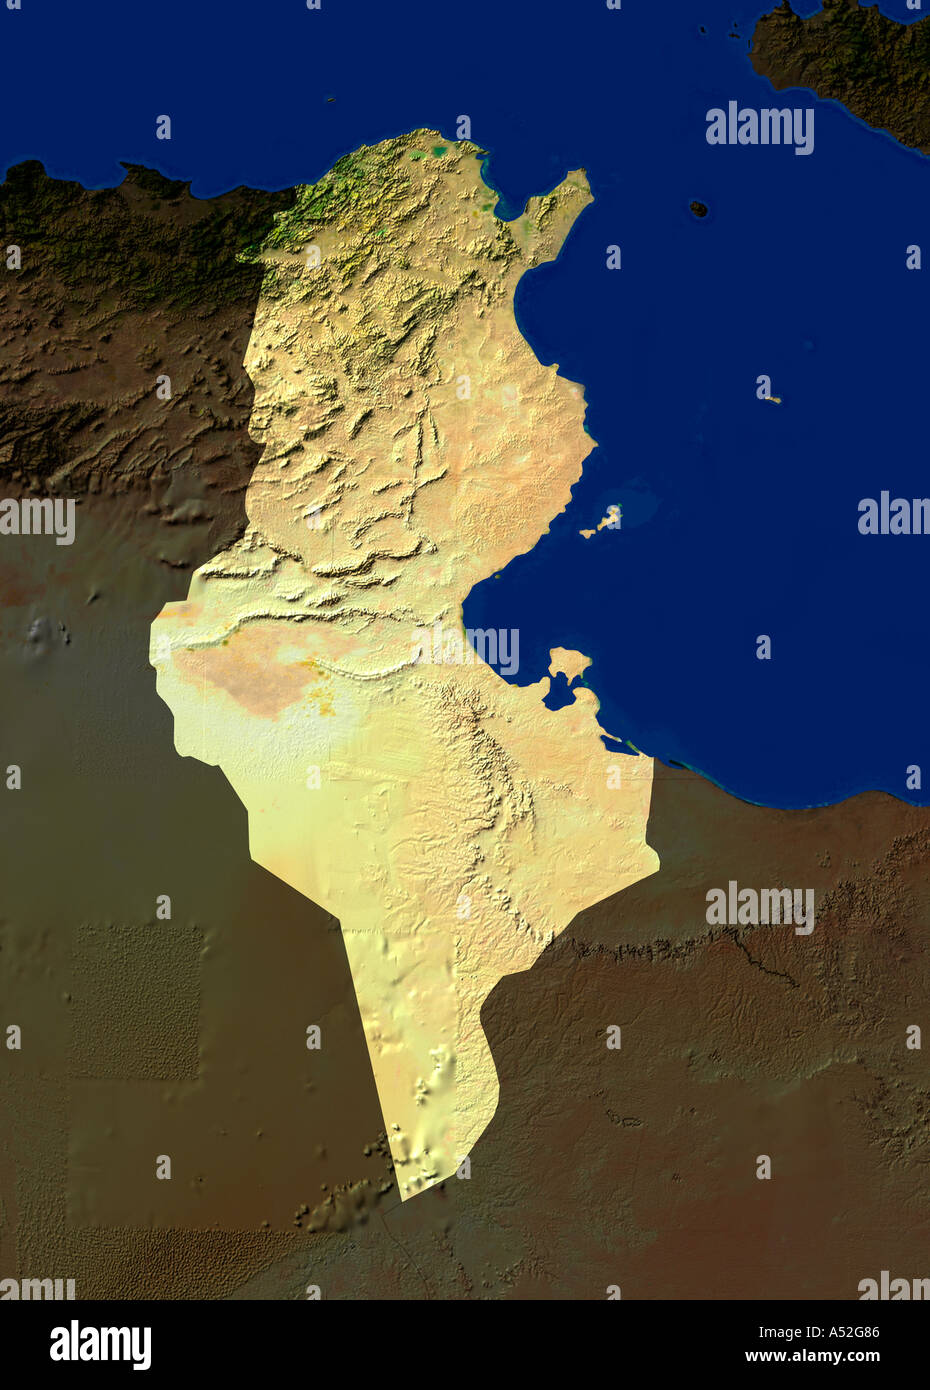 Tunisia Map Satellite Geography Banque d'image et photos Alamy